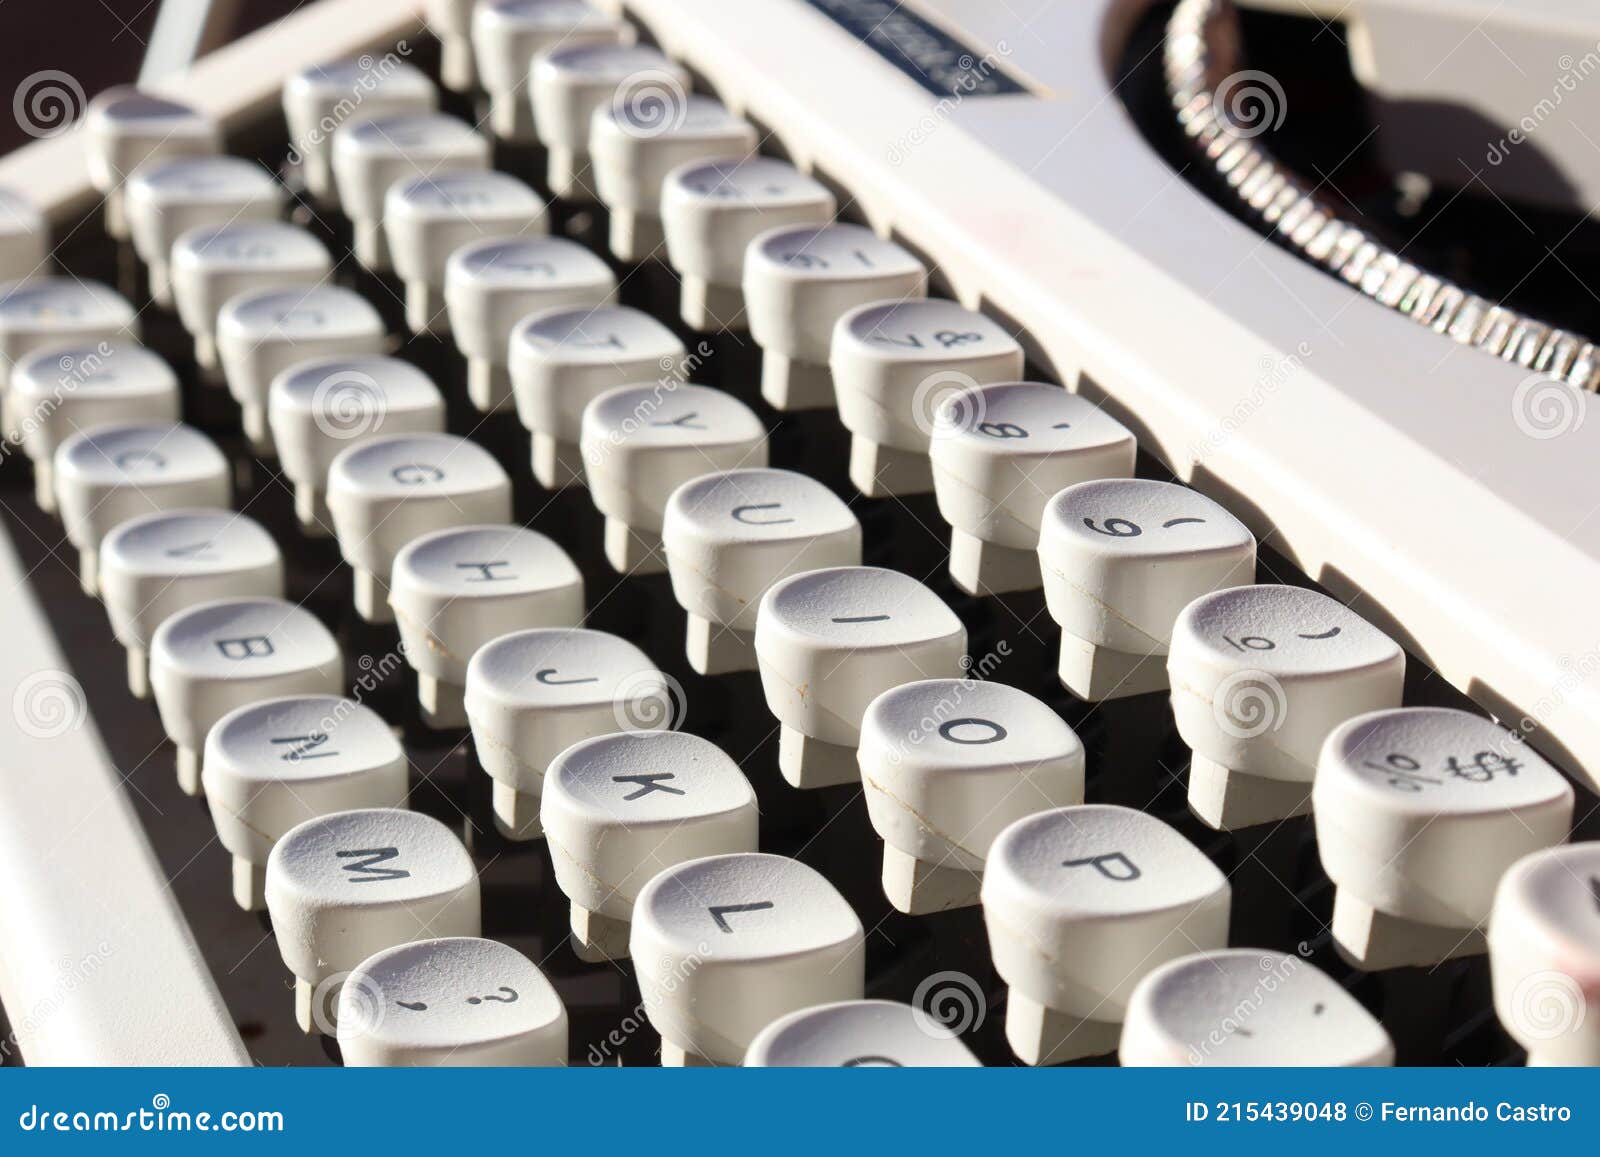 typewriter keyboard seen in perspective.